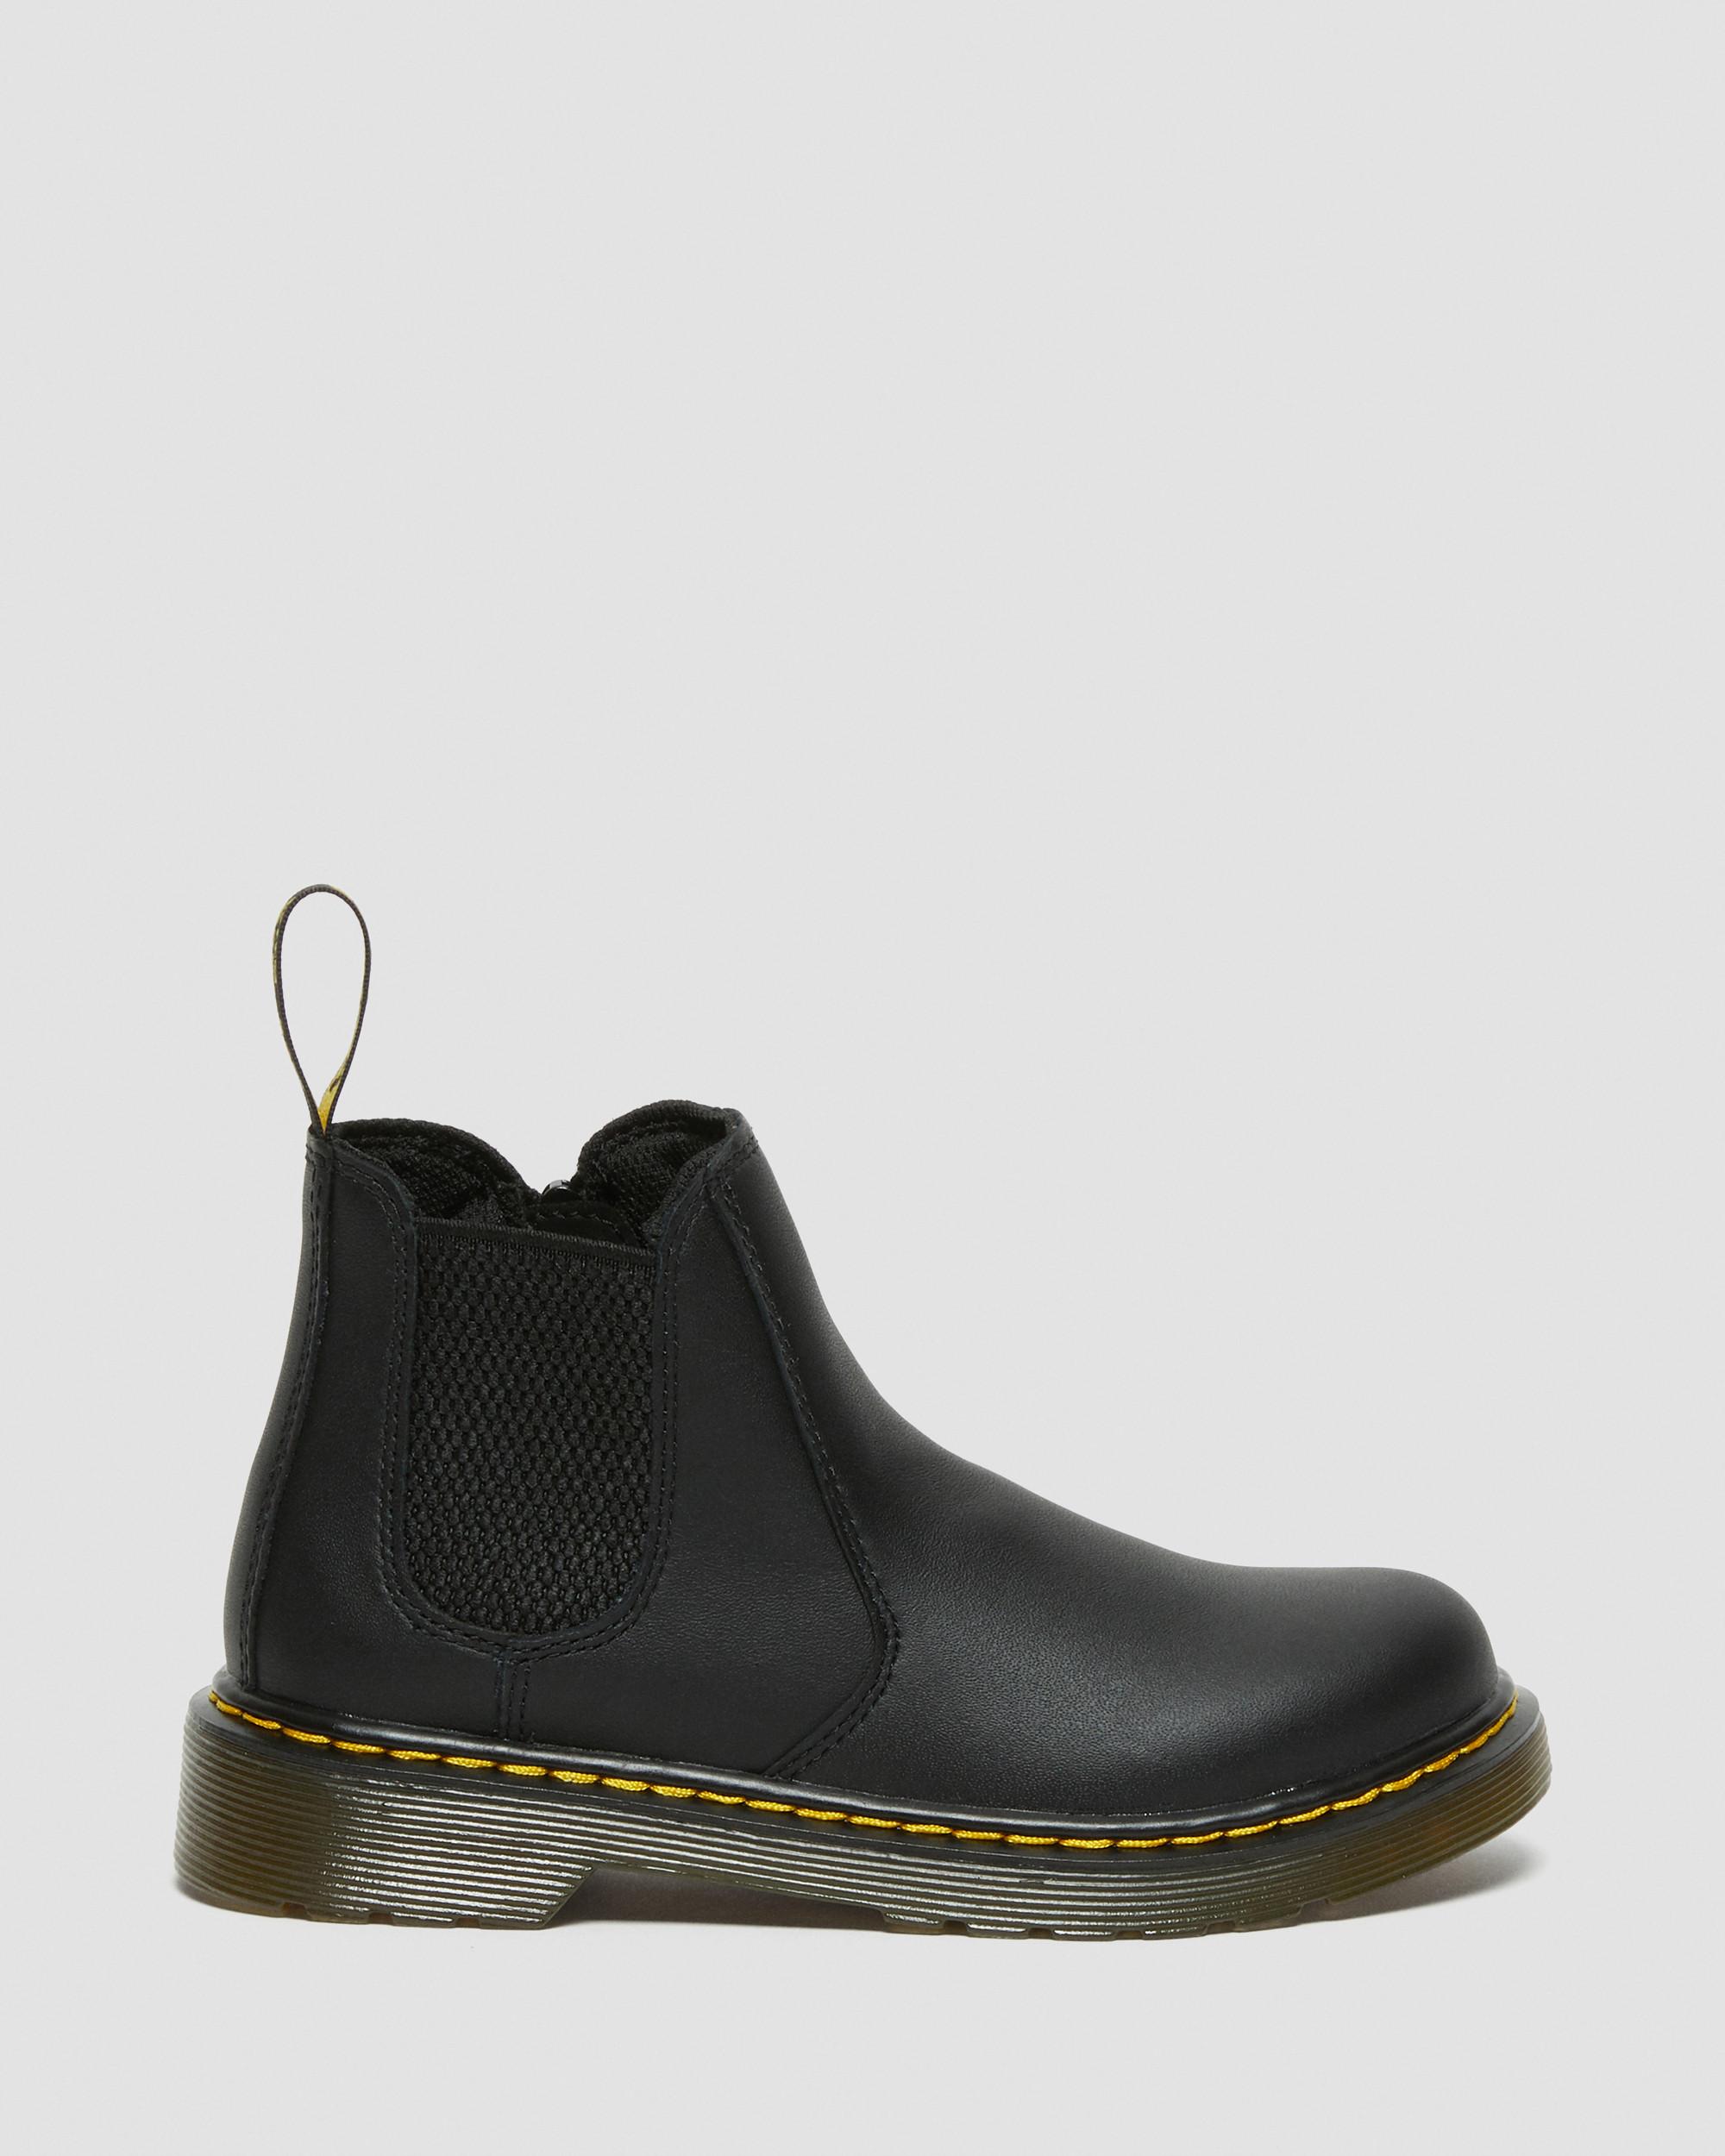 Dr Martens Black 2976 J Softy T Slip On Boots *Size 12K UK* BNIB 